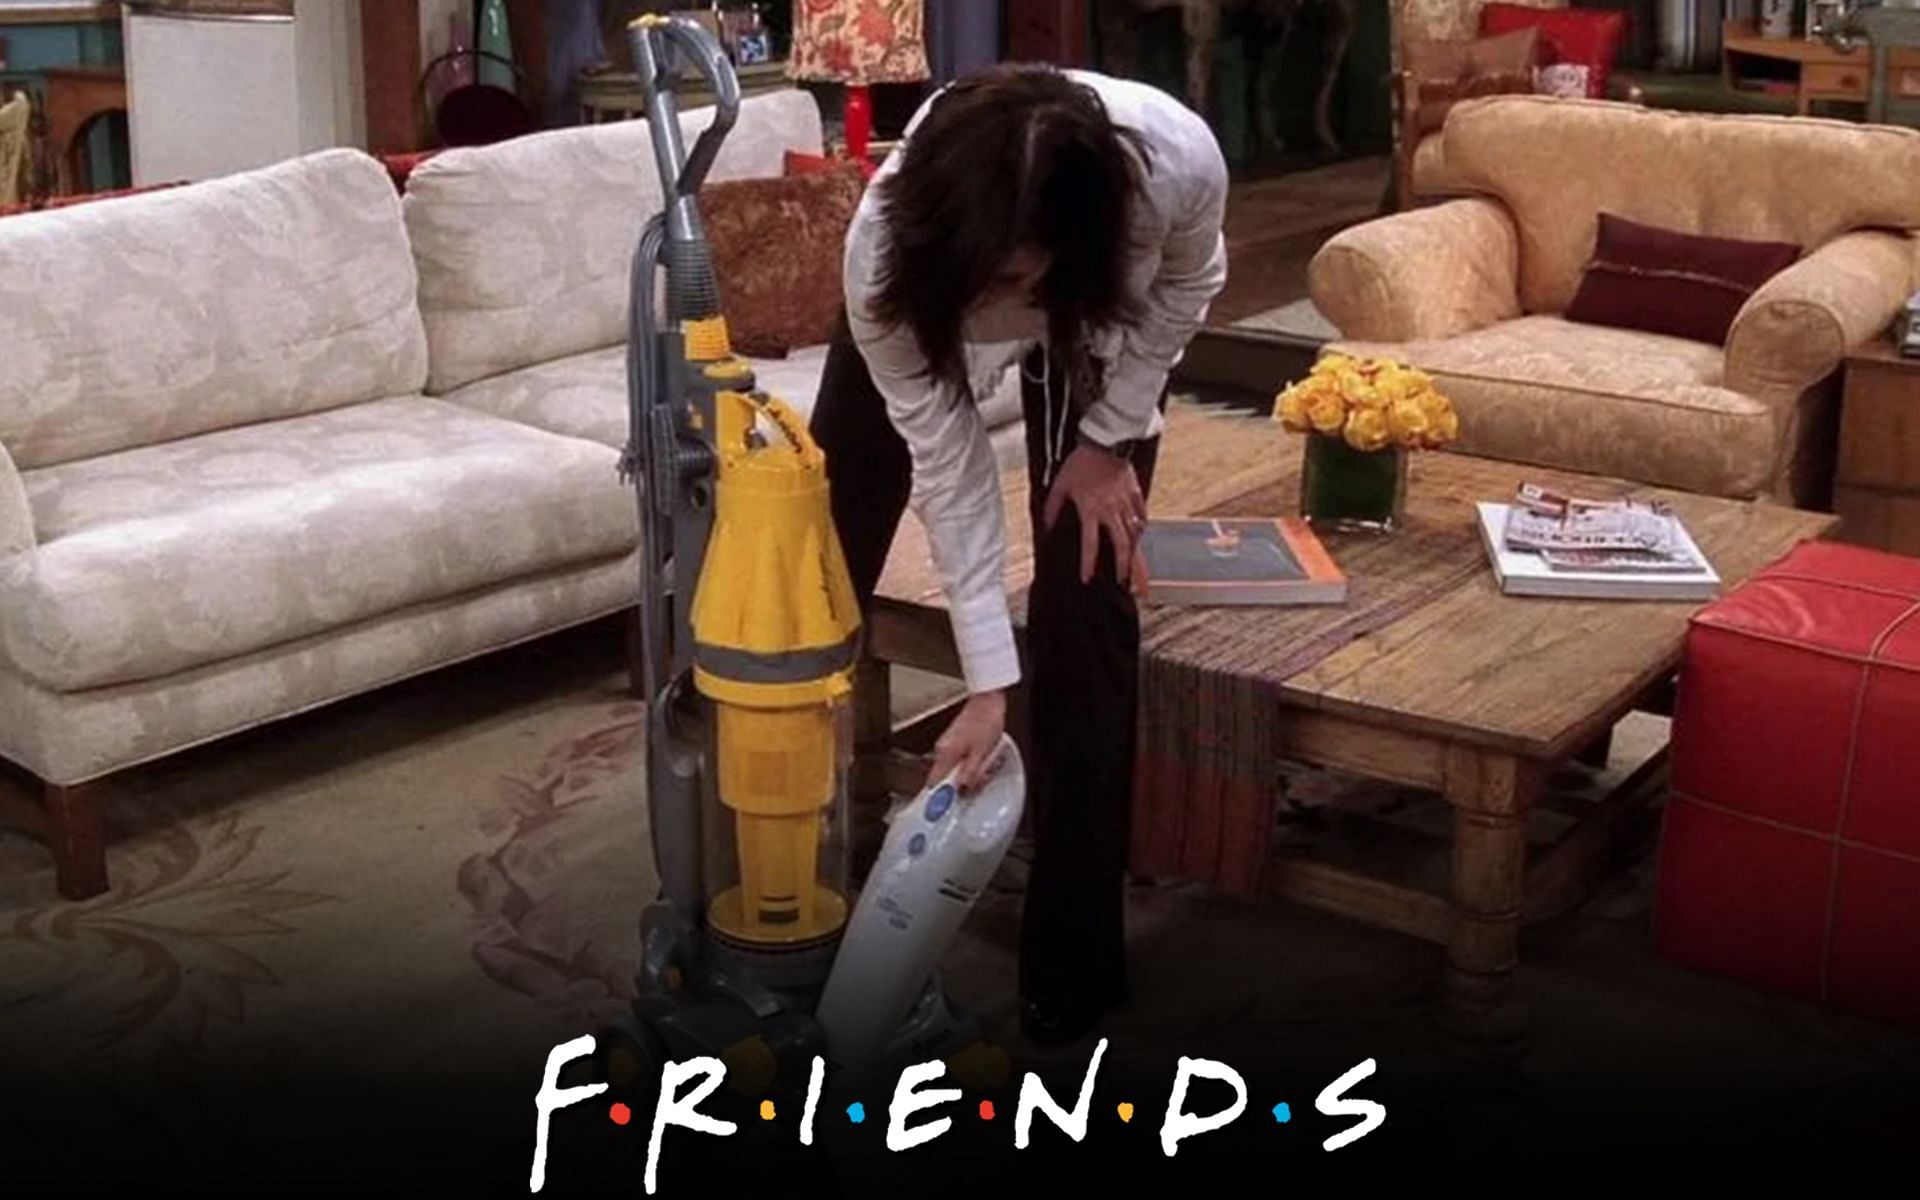 A still of Monica Geller in Friends (Image via Sportskeeda)